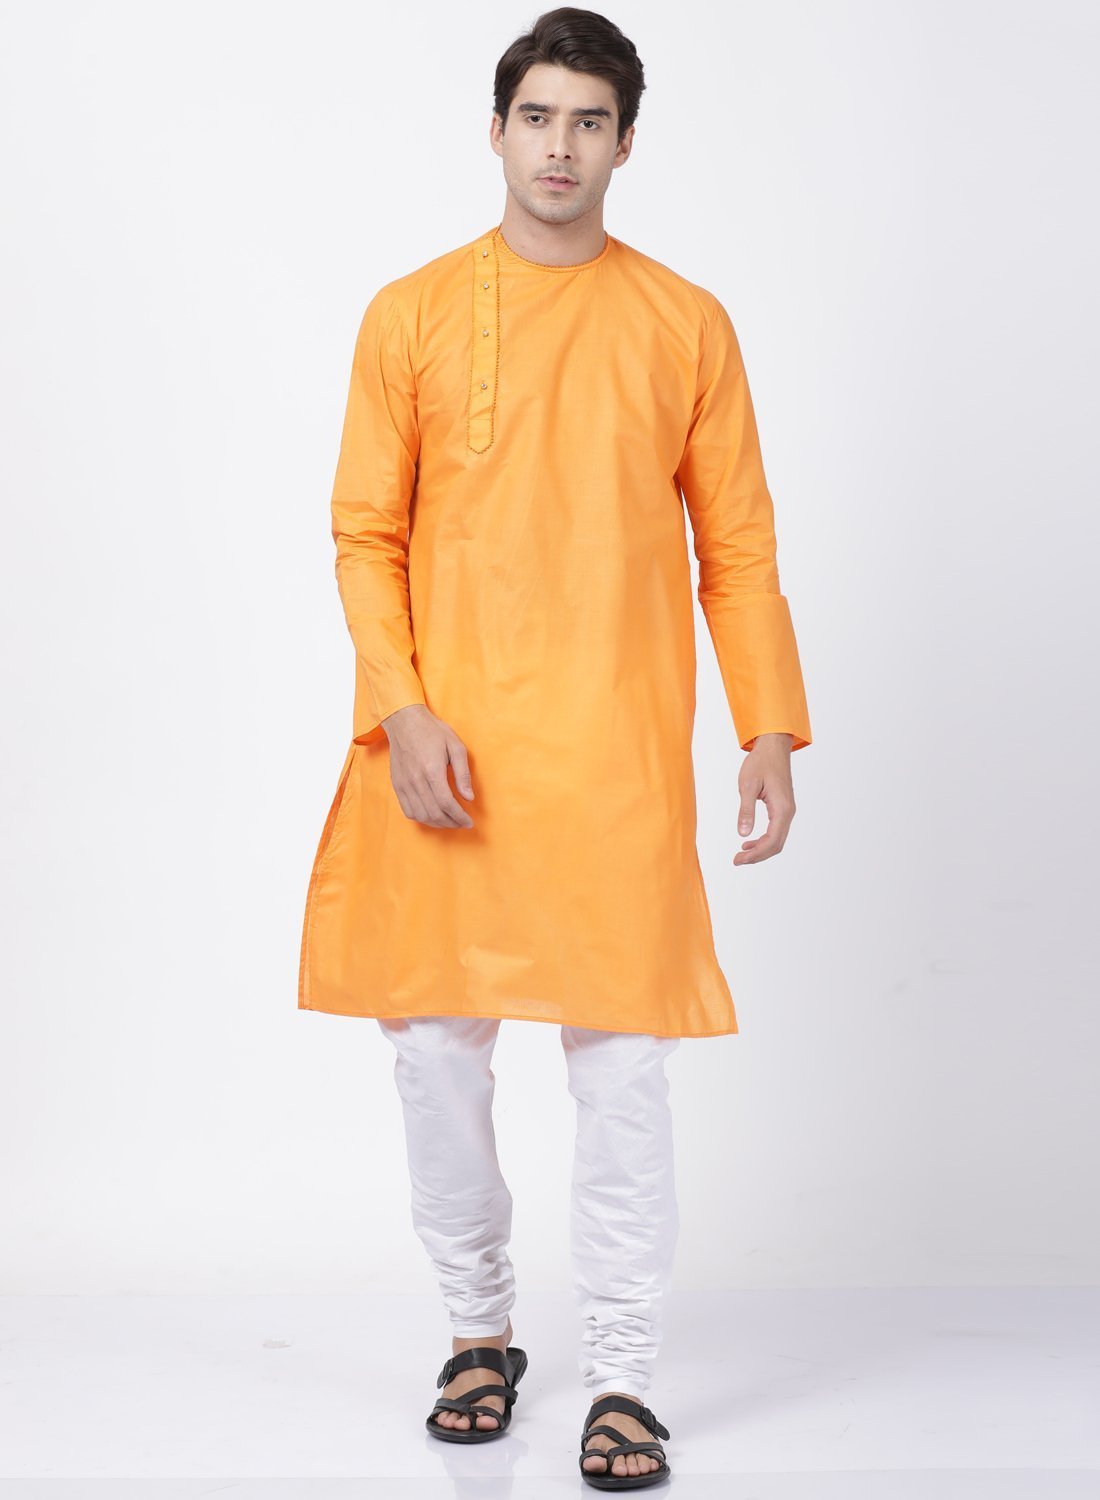 Men's Orange Cotton Blend Kurta and Pyjama Set